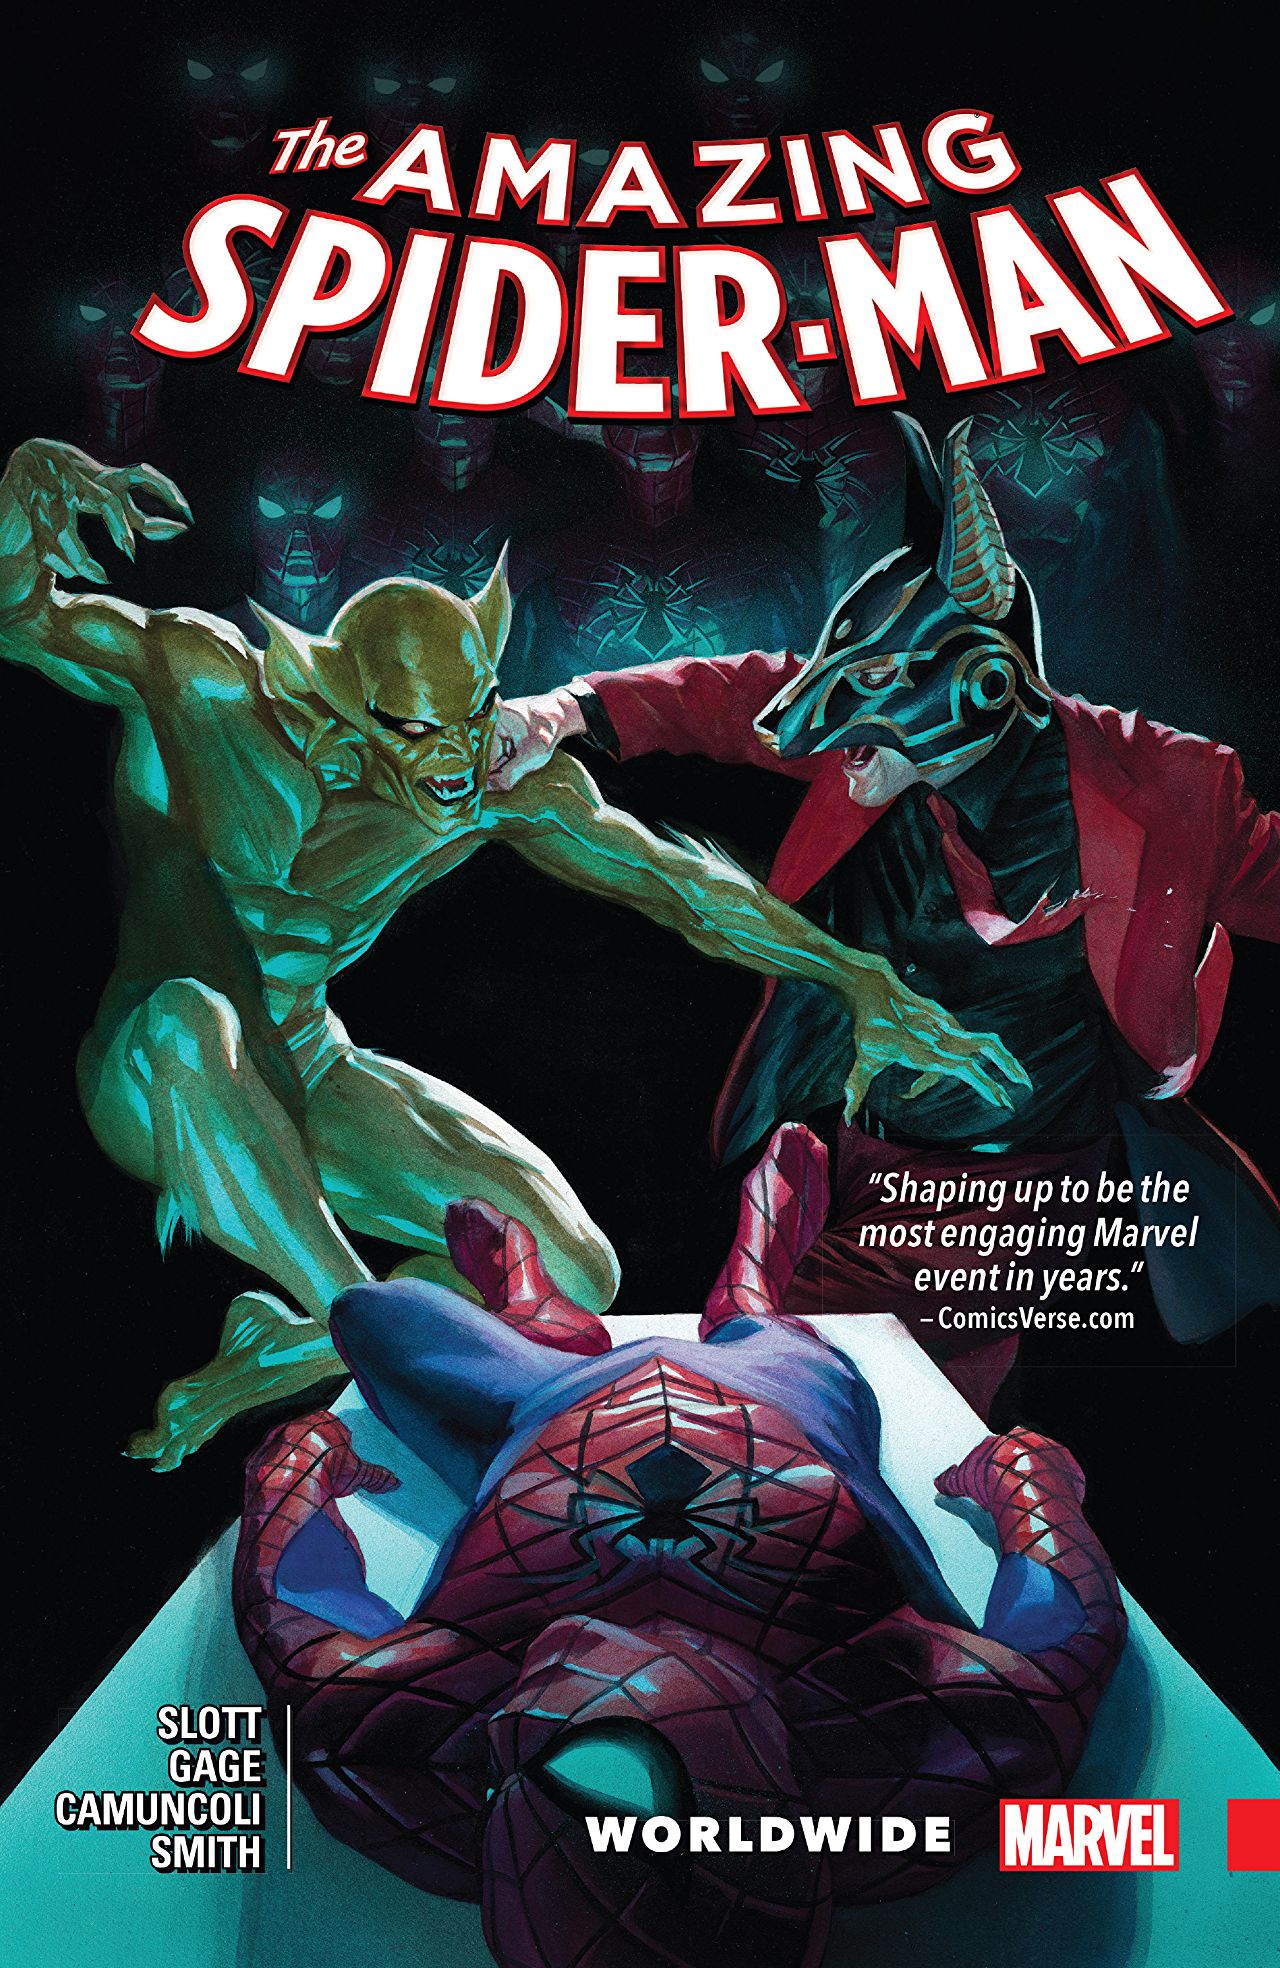 Amazing Spider-Man: Worldwide Vol. 5 Review